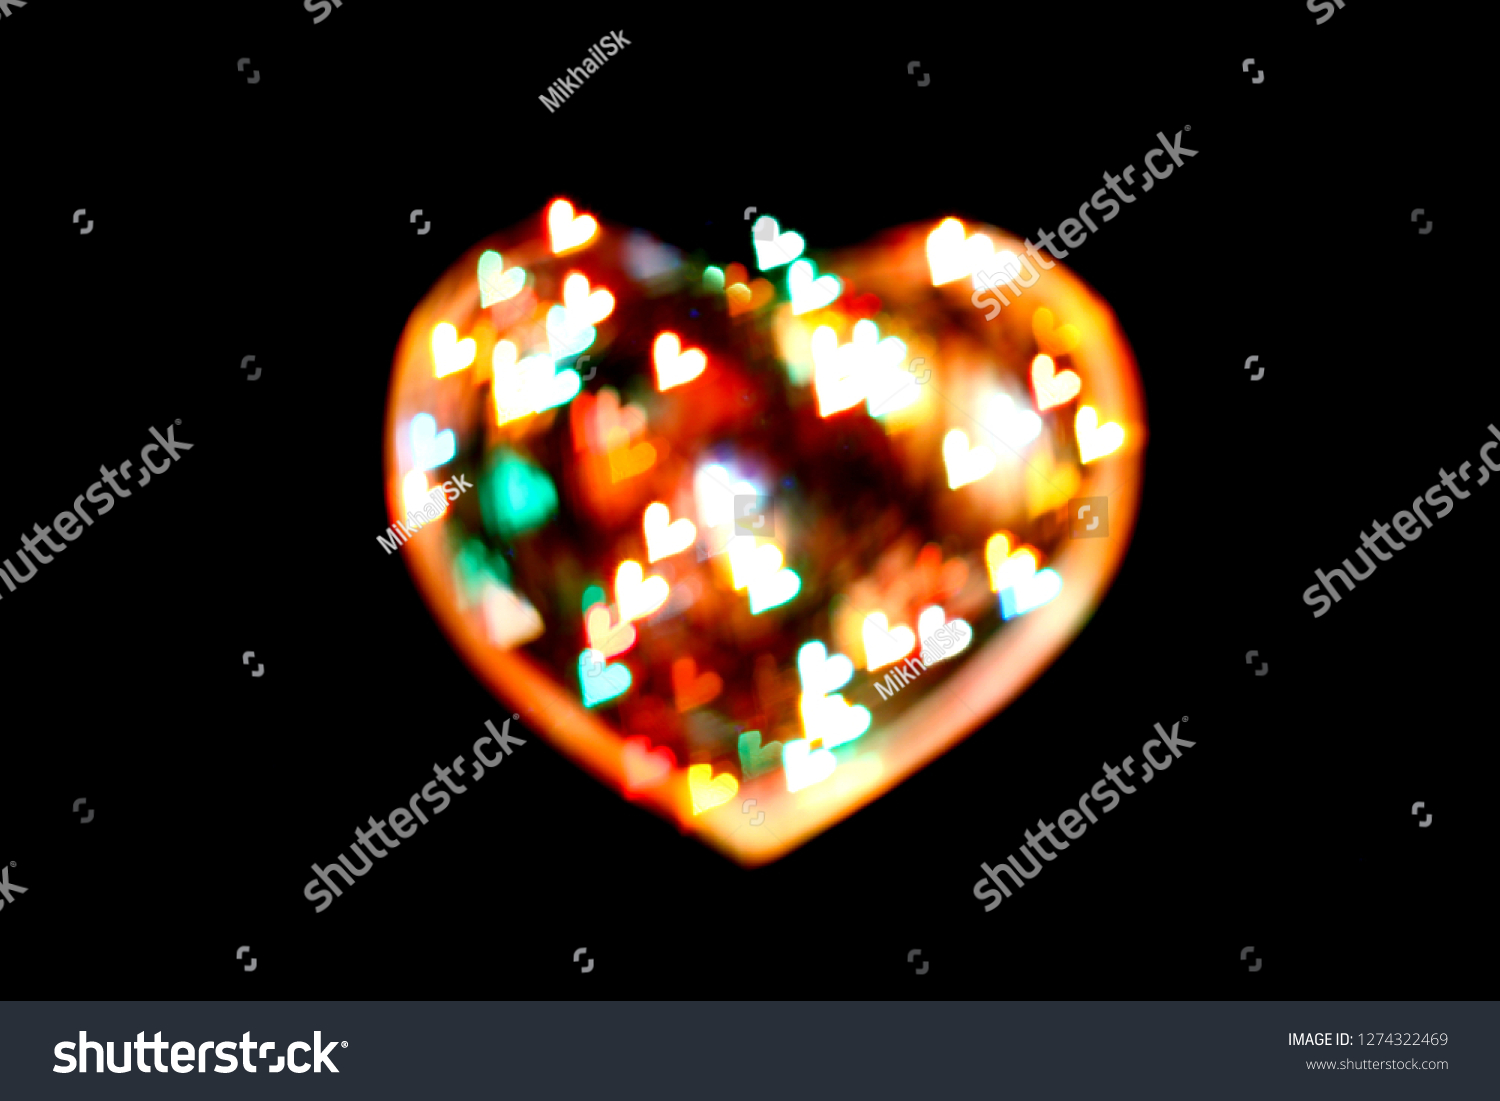 Neon Lights Shaped Heart Bokeh Form Stock Photo 1274322469 | Shutterstock